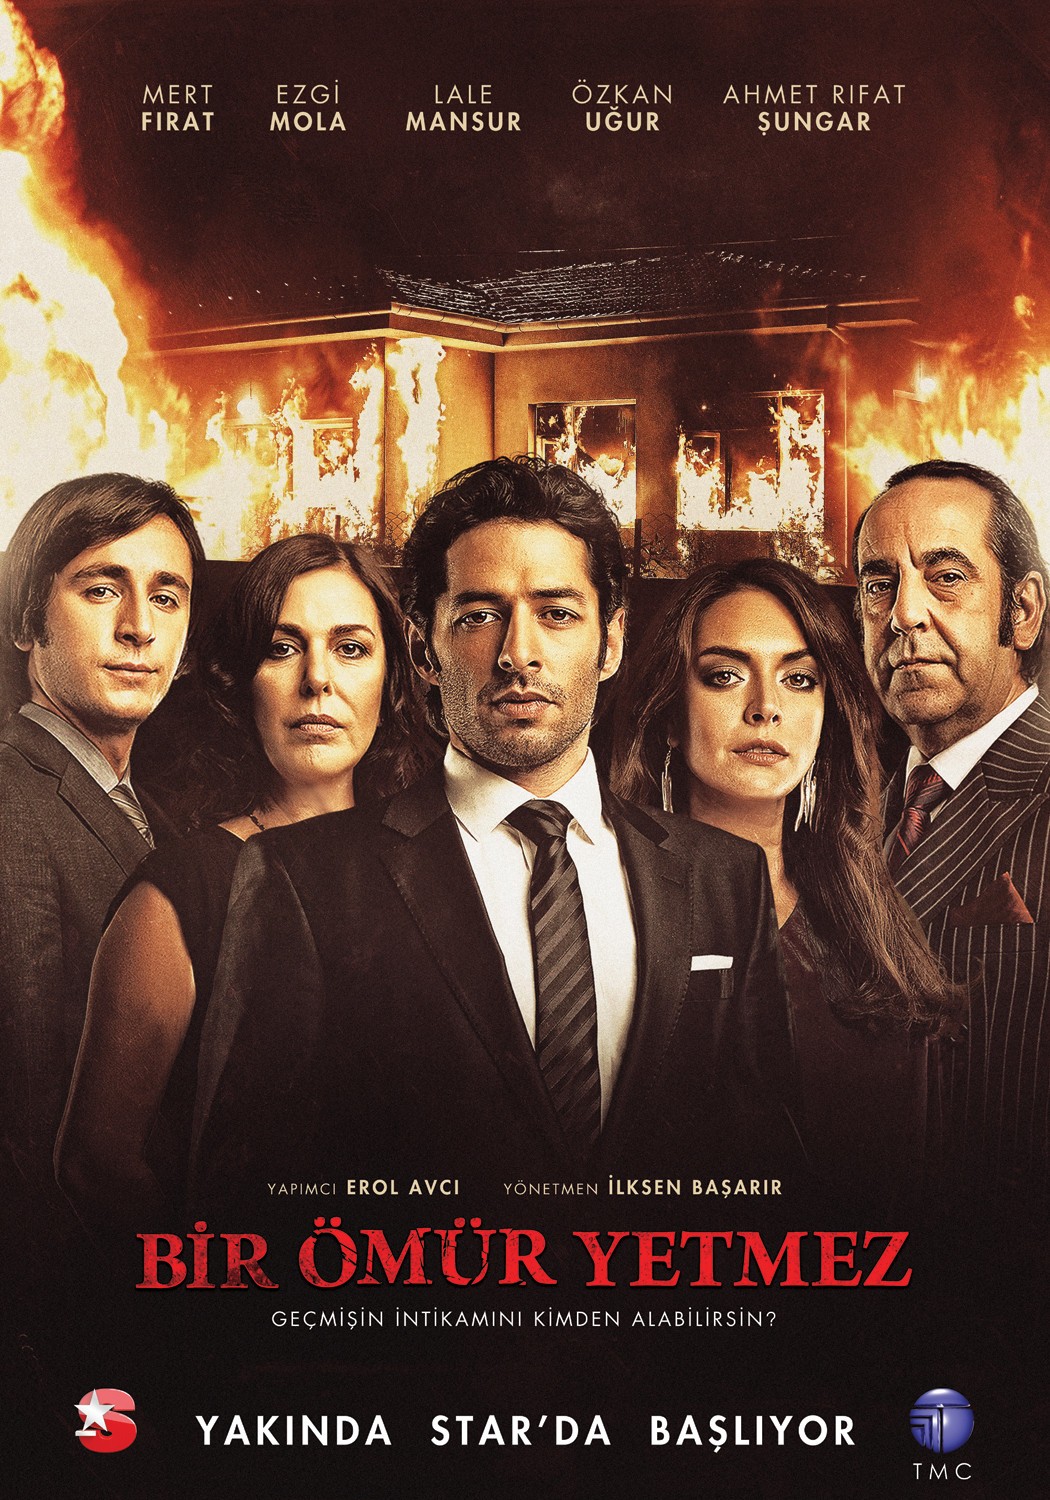 Extra Large TV Poster Image for Bir Ömür Yetmez (#2 of 2)